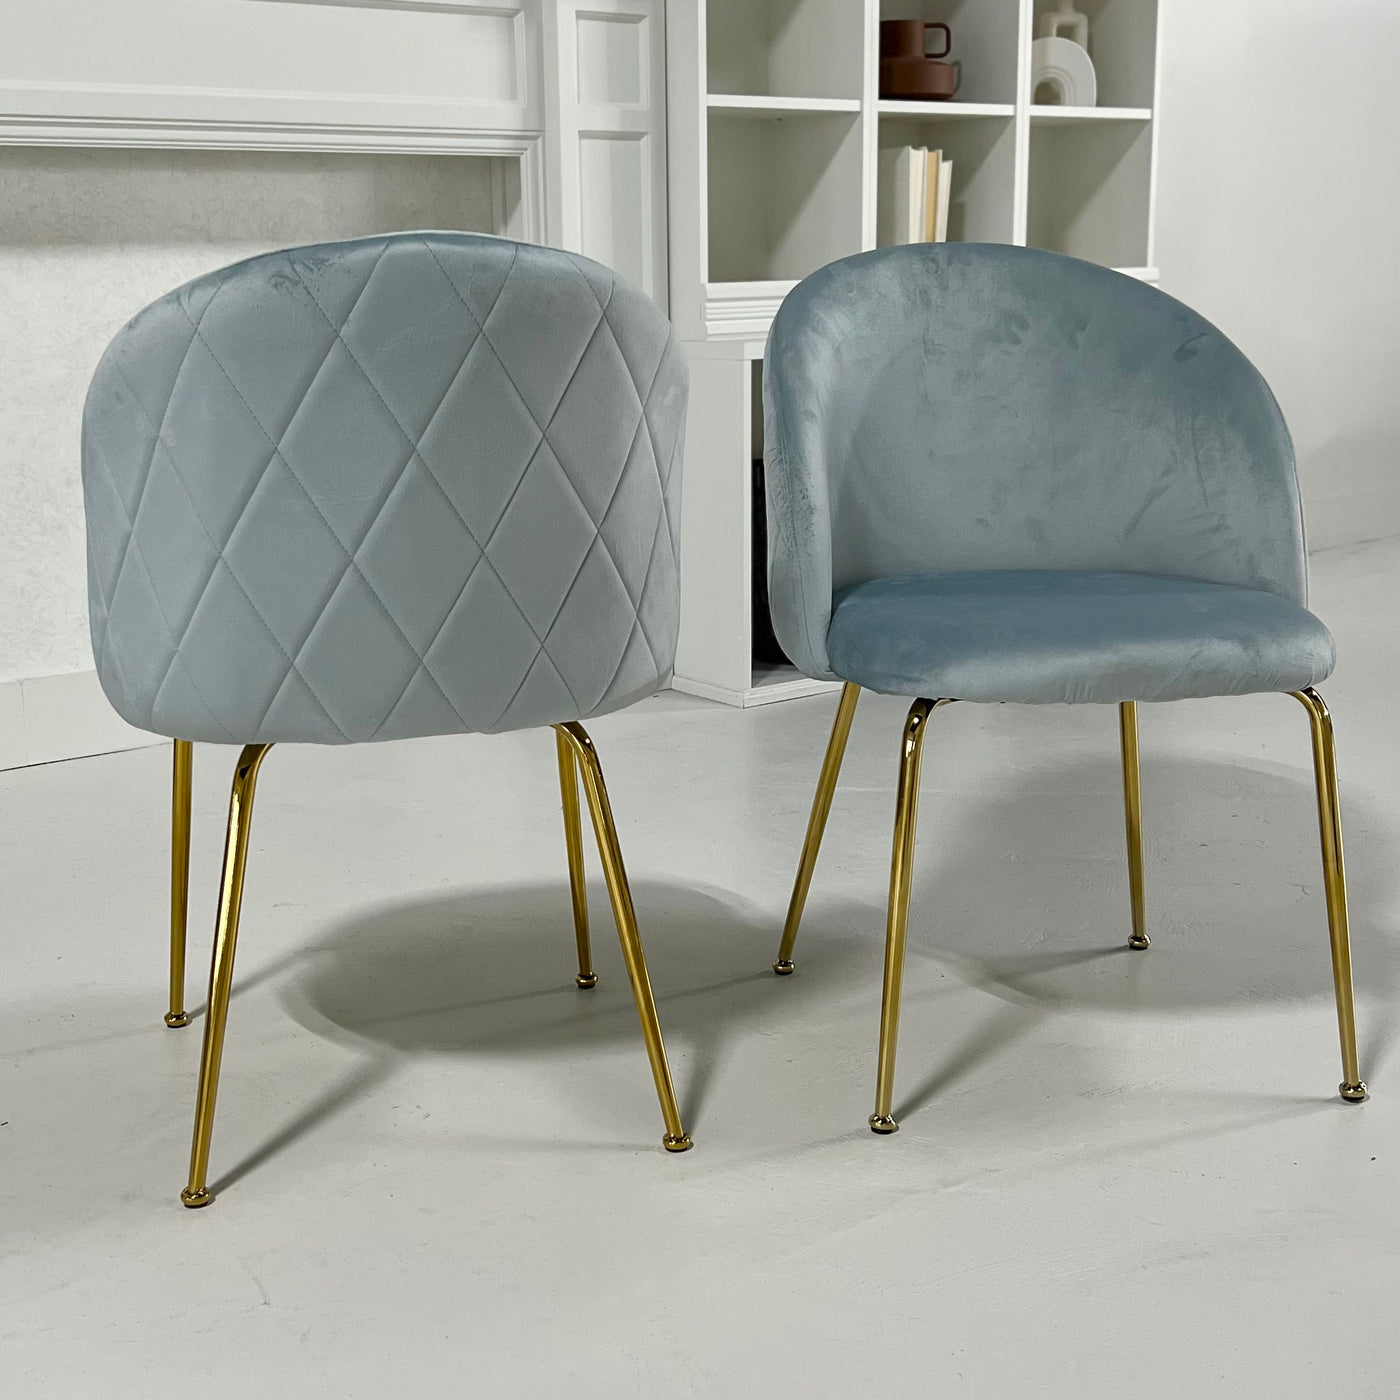 Agatha Grey velvet chair with gold legs